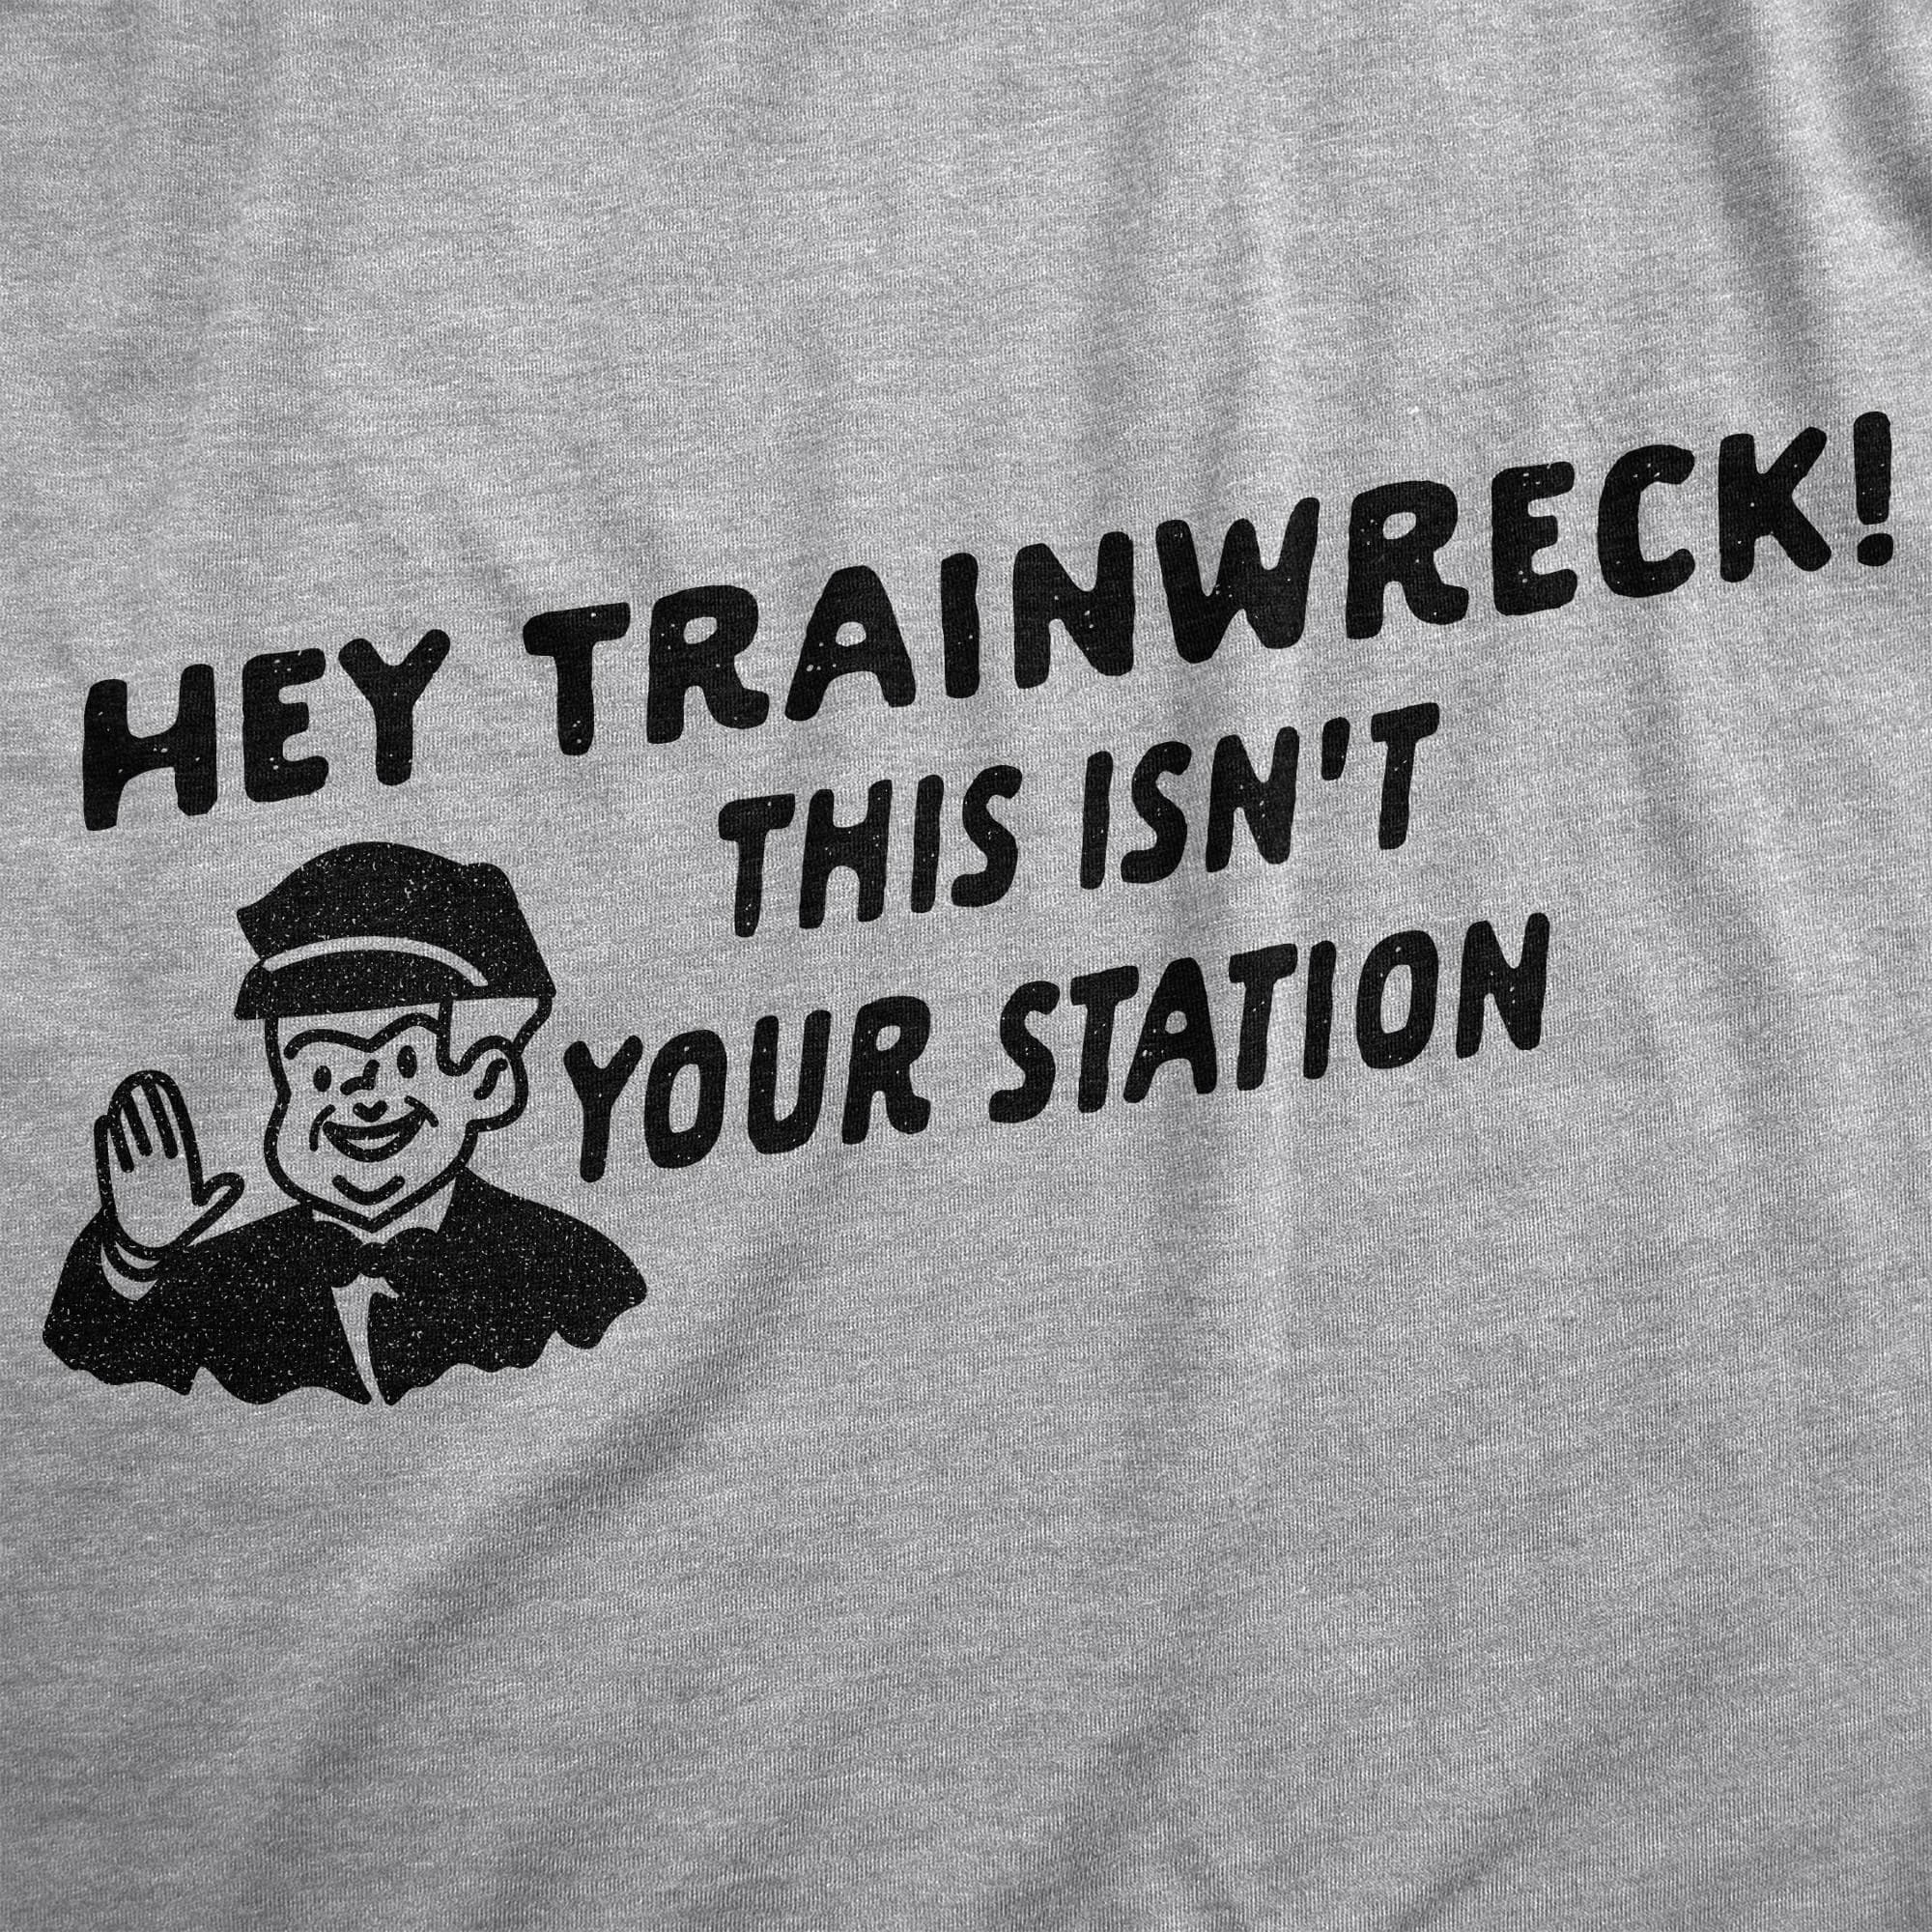 Hey Trainwreck Men's Tshirt - Crazy Dog T-Shirts